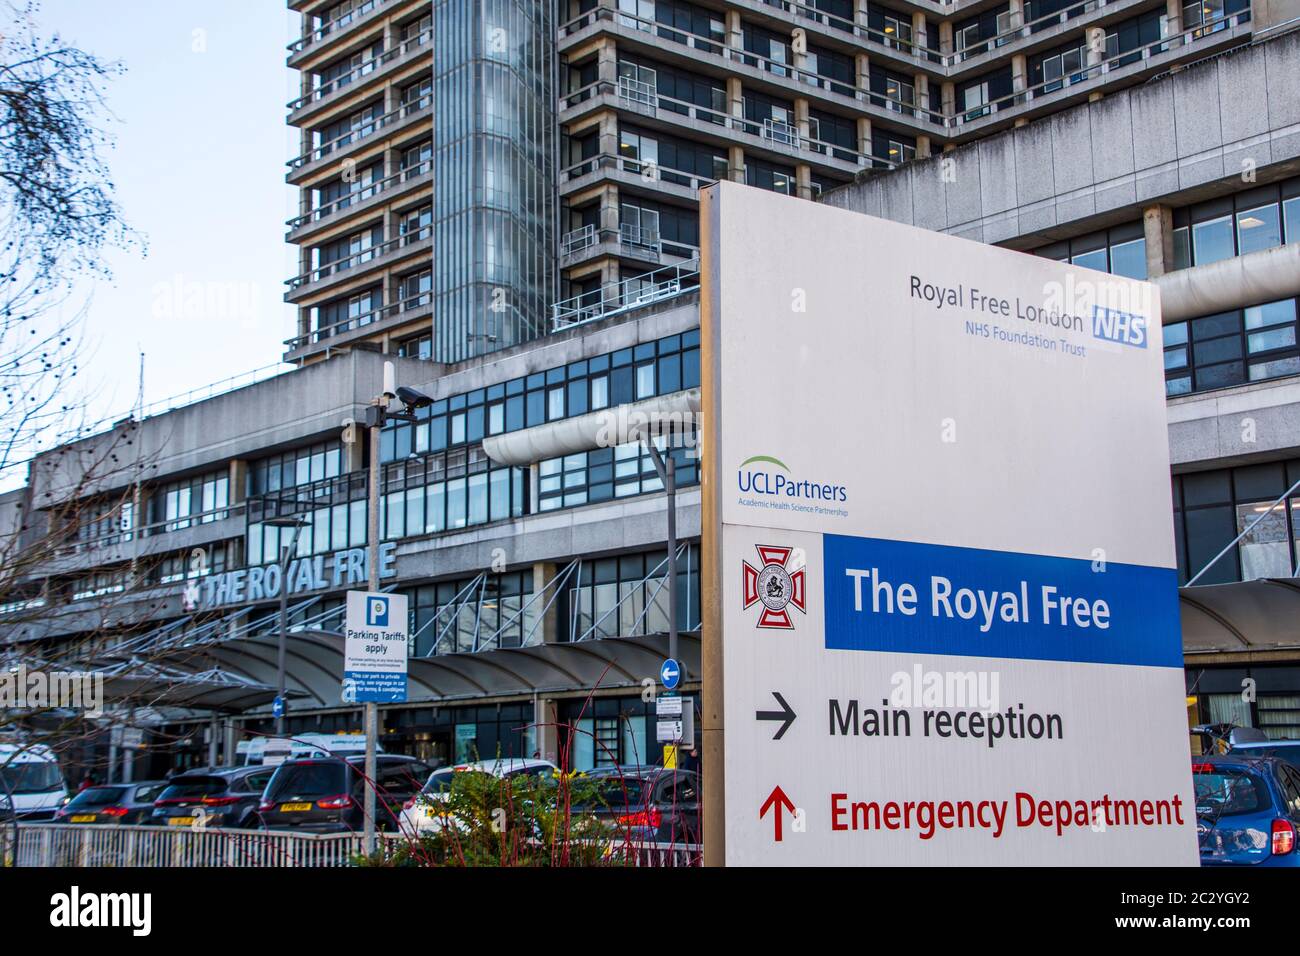 LONDON - JANUAR 2019: Das Royal Free London Hospital in Hampstead. Ein großes Lehrkrankenhaus im Nordwesten Londons. Stockfoto